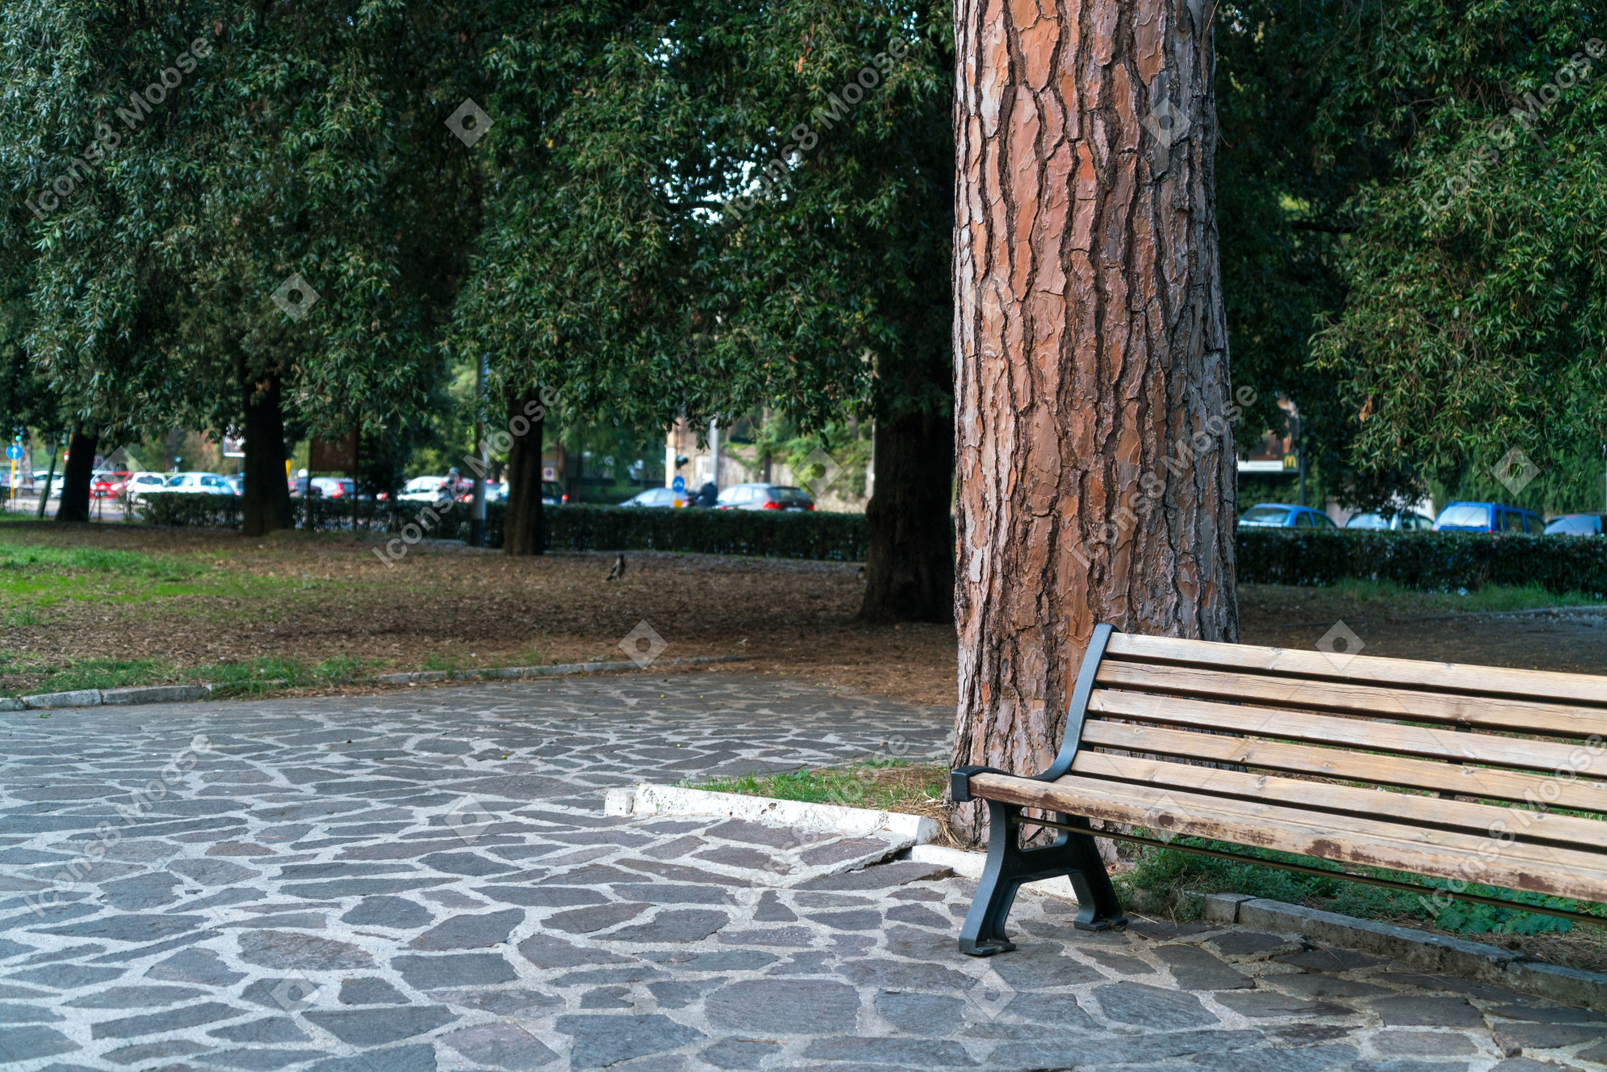 Panchina accanto all'albero nel parco